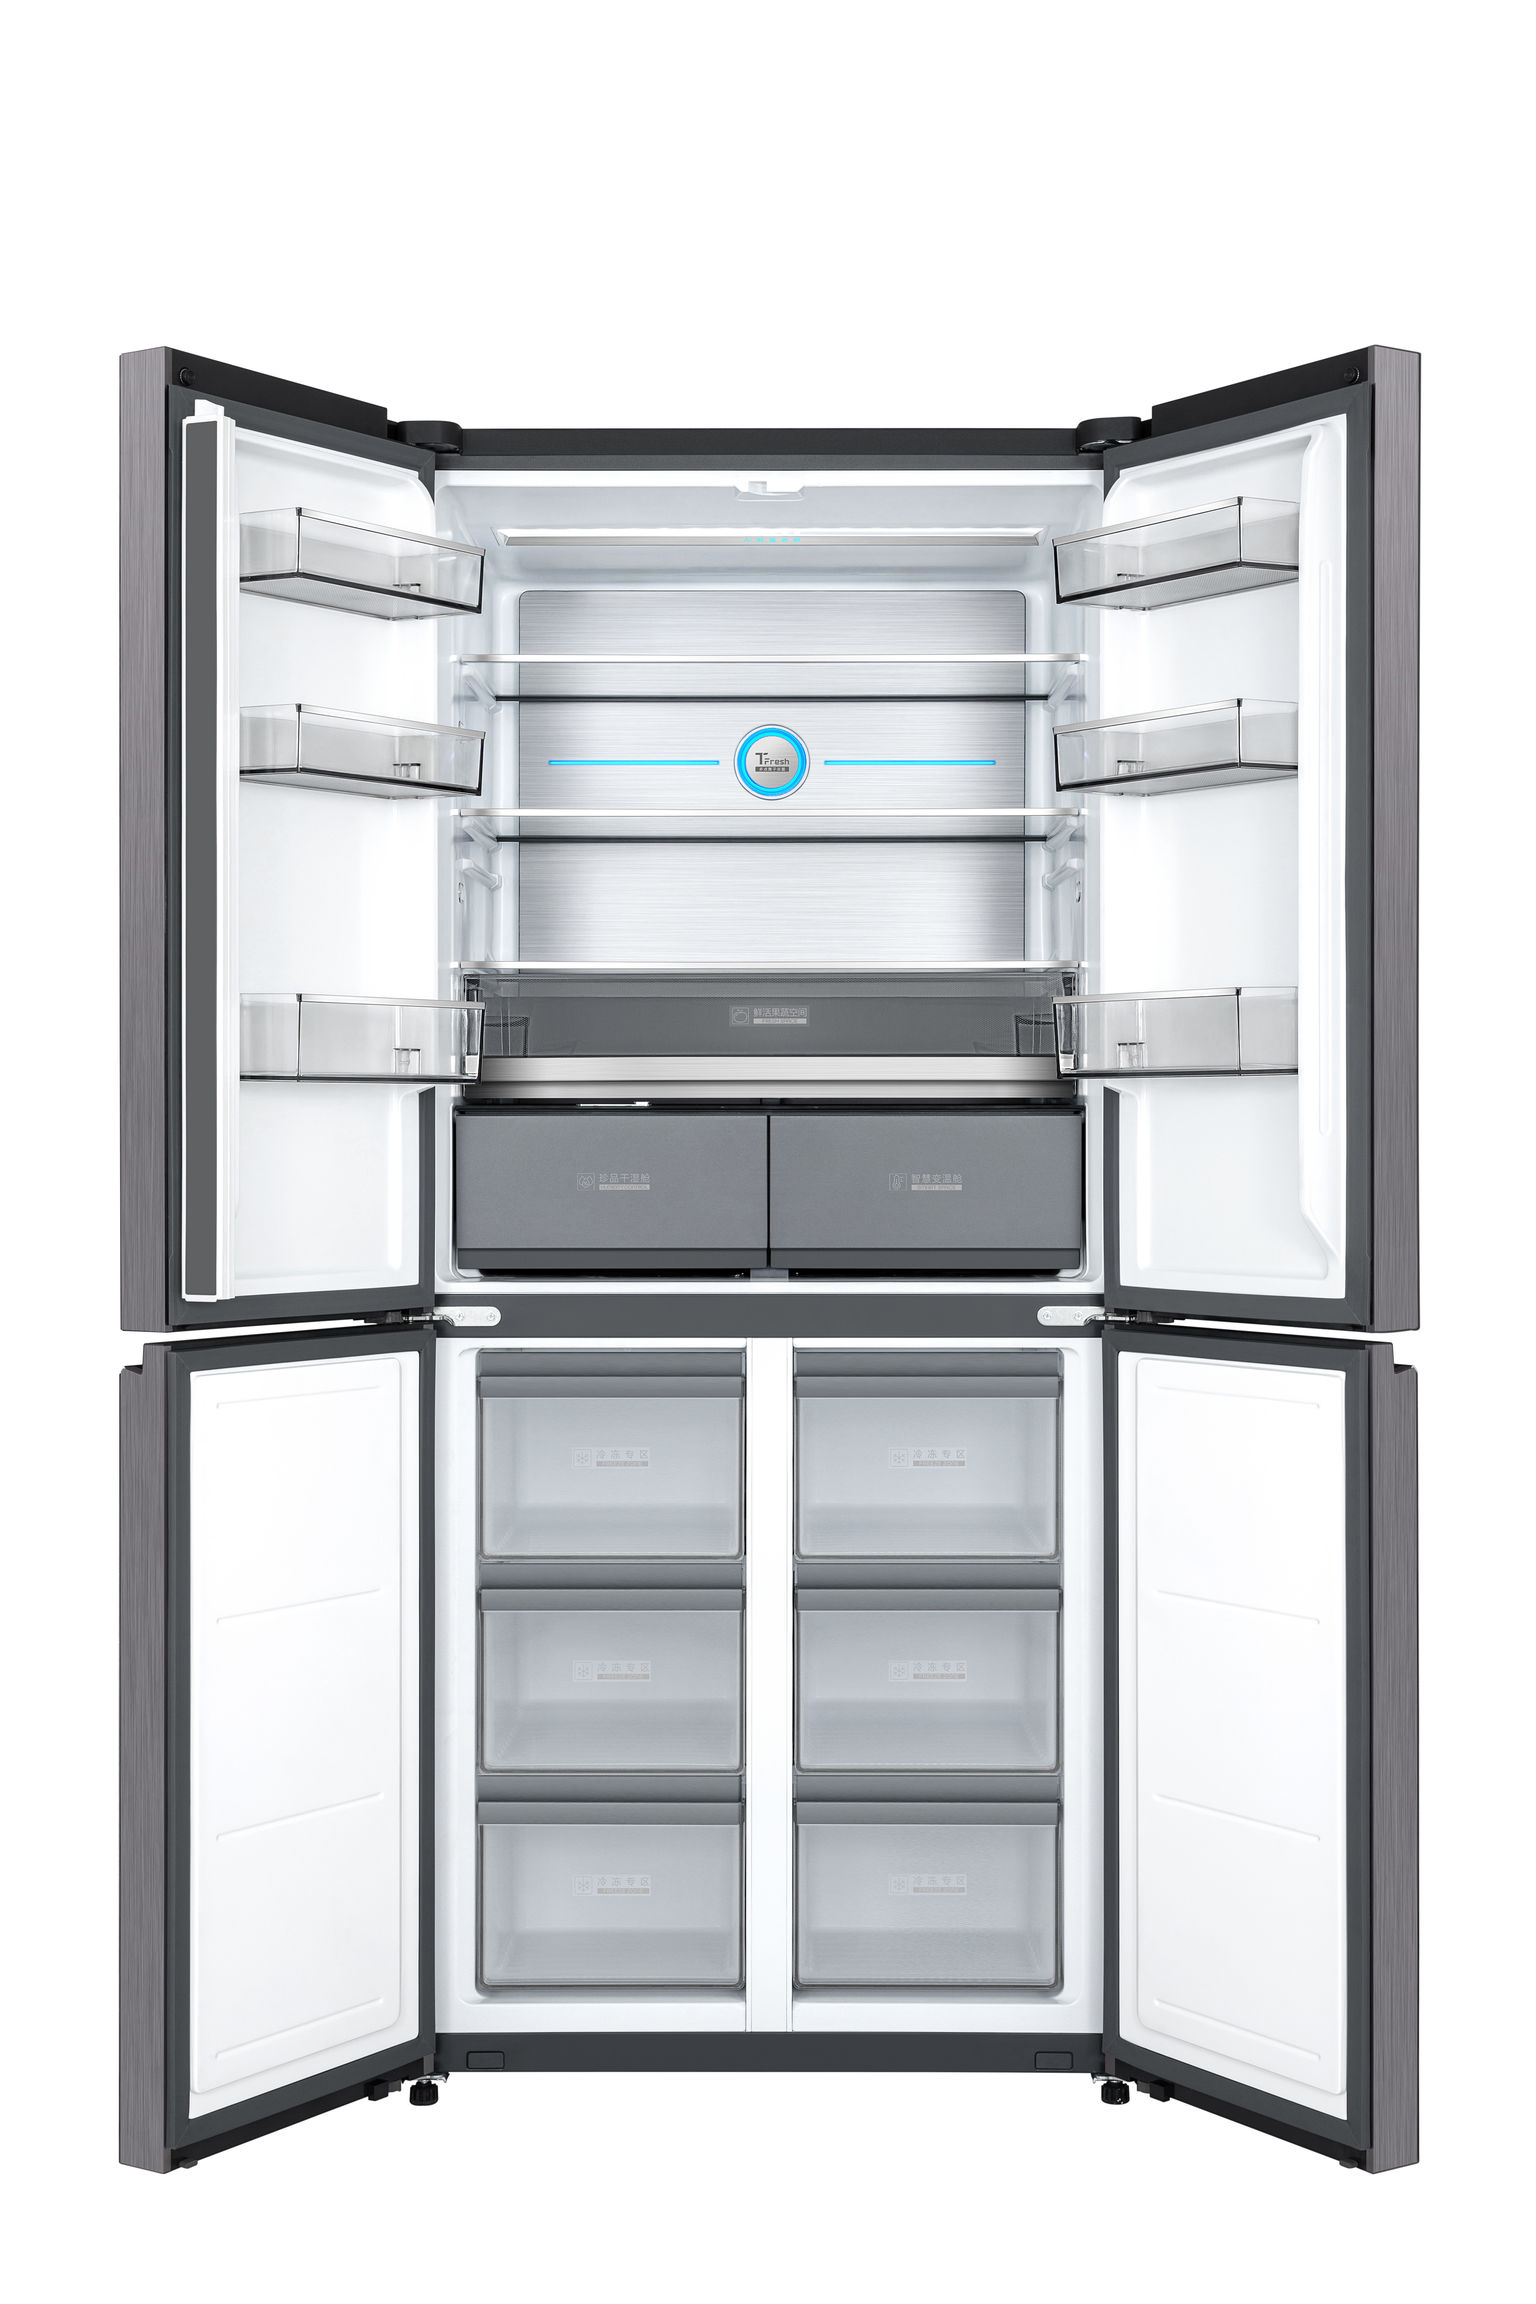 TCL C12 Refrigerator